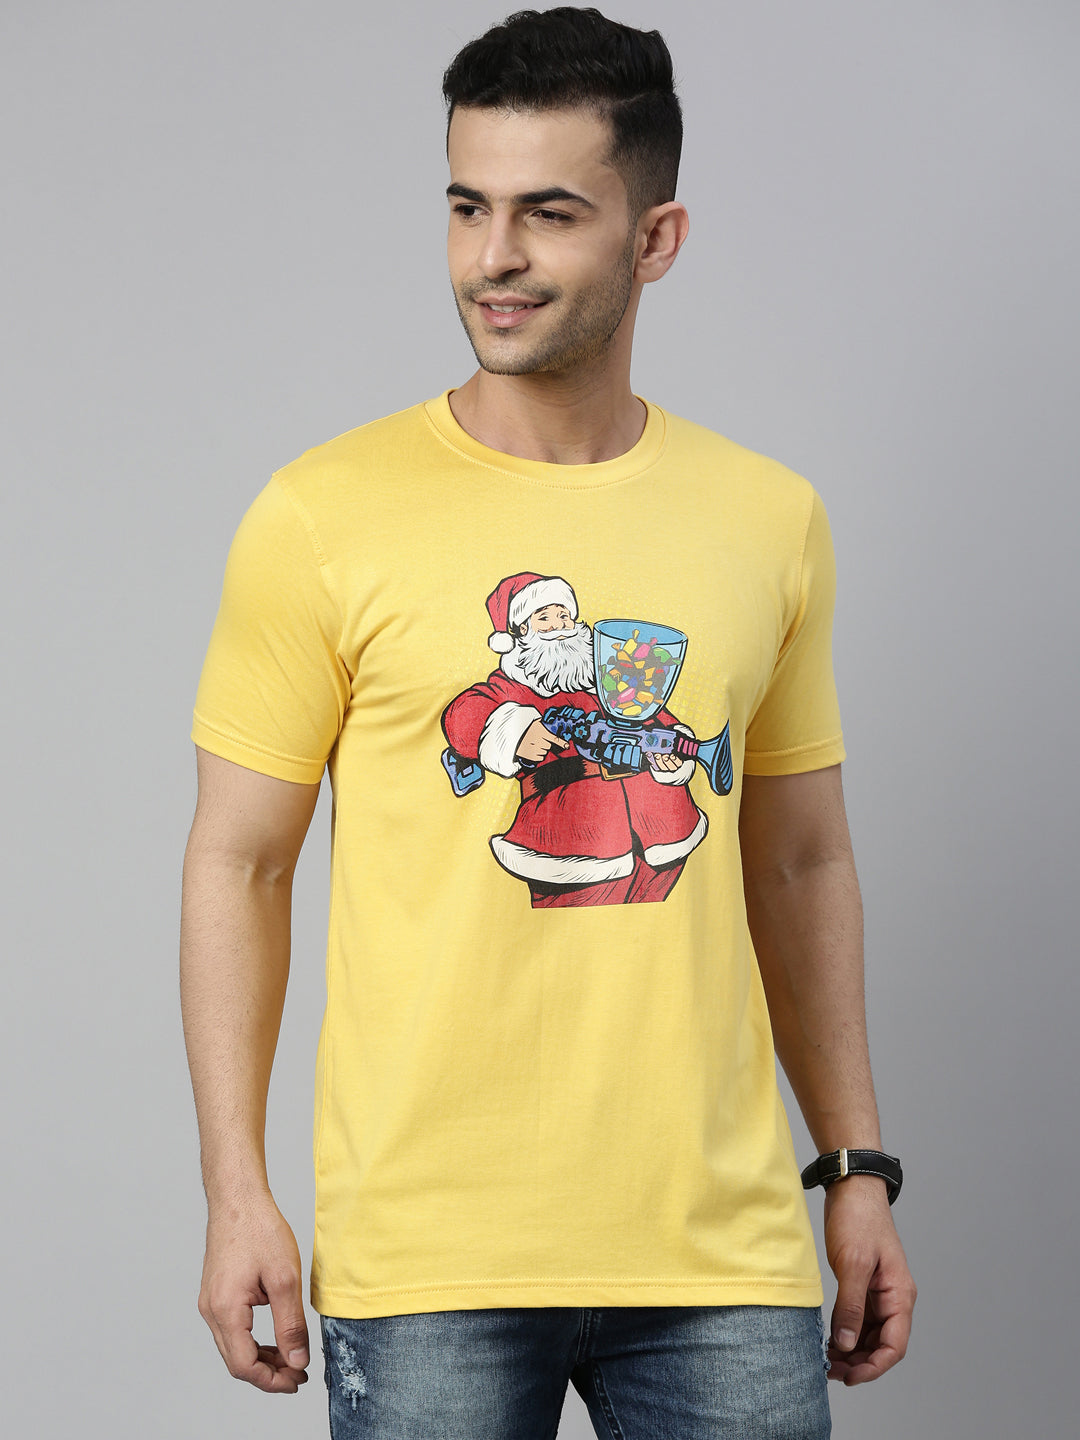 Santa With Candies T-Shirt Graphic T-Shirts Bushirt   